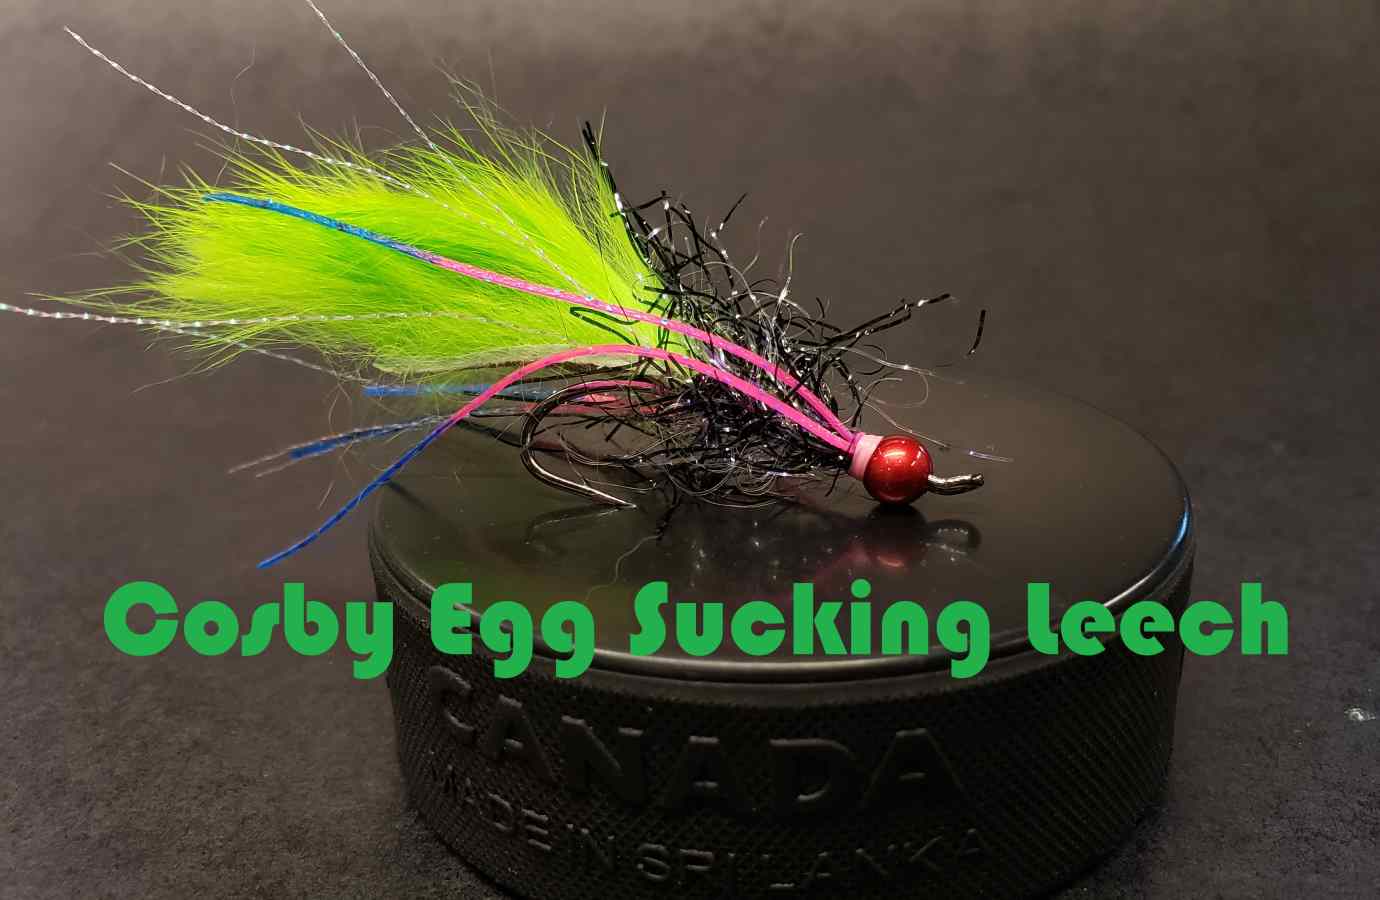 Friday Night Flies - Cosby Egg Sucking Leech